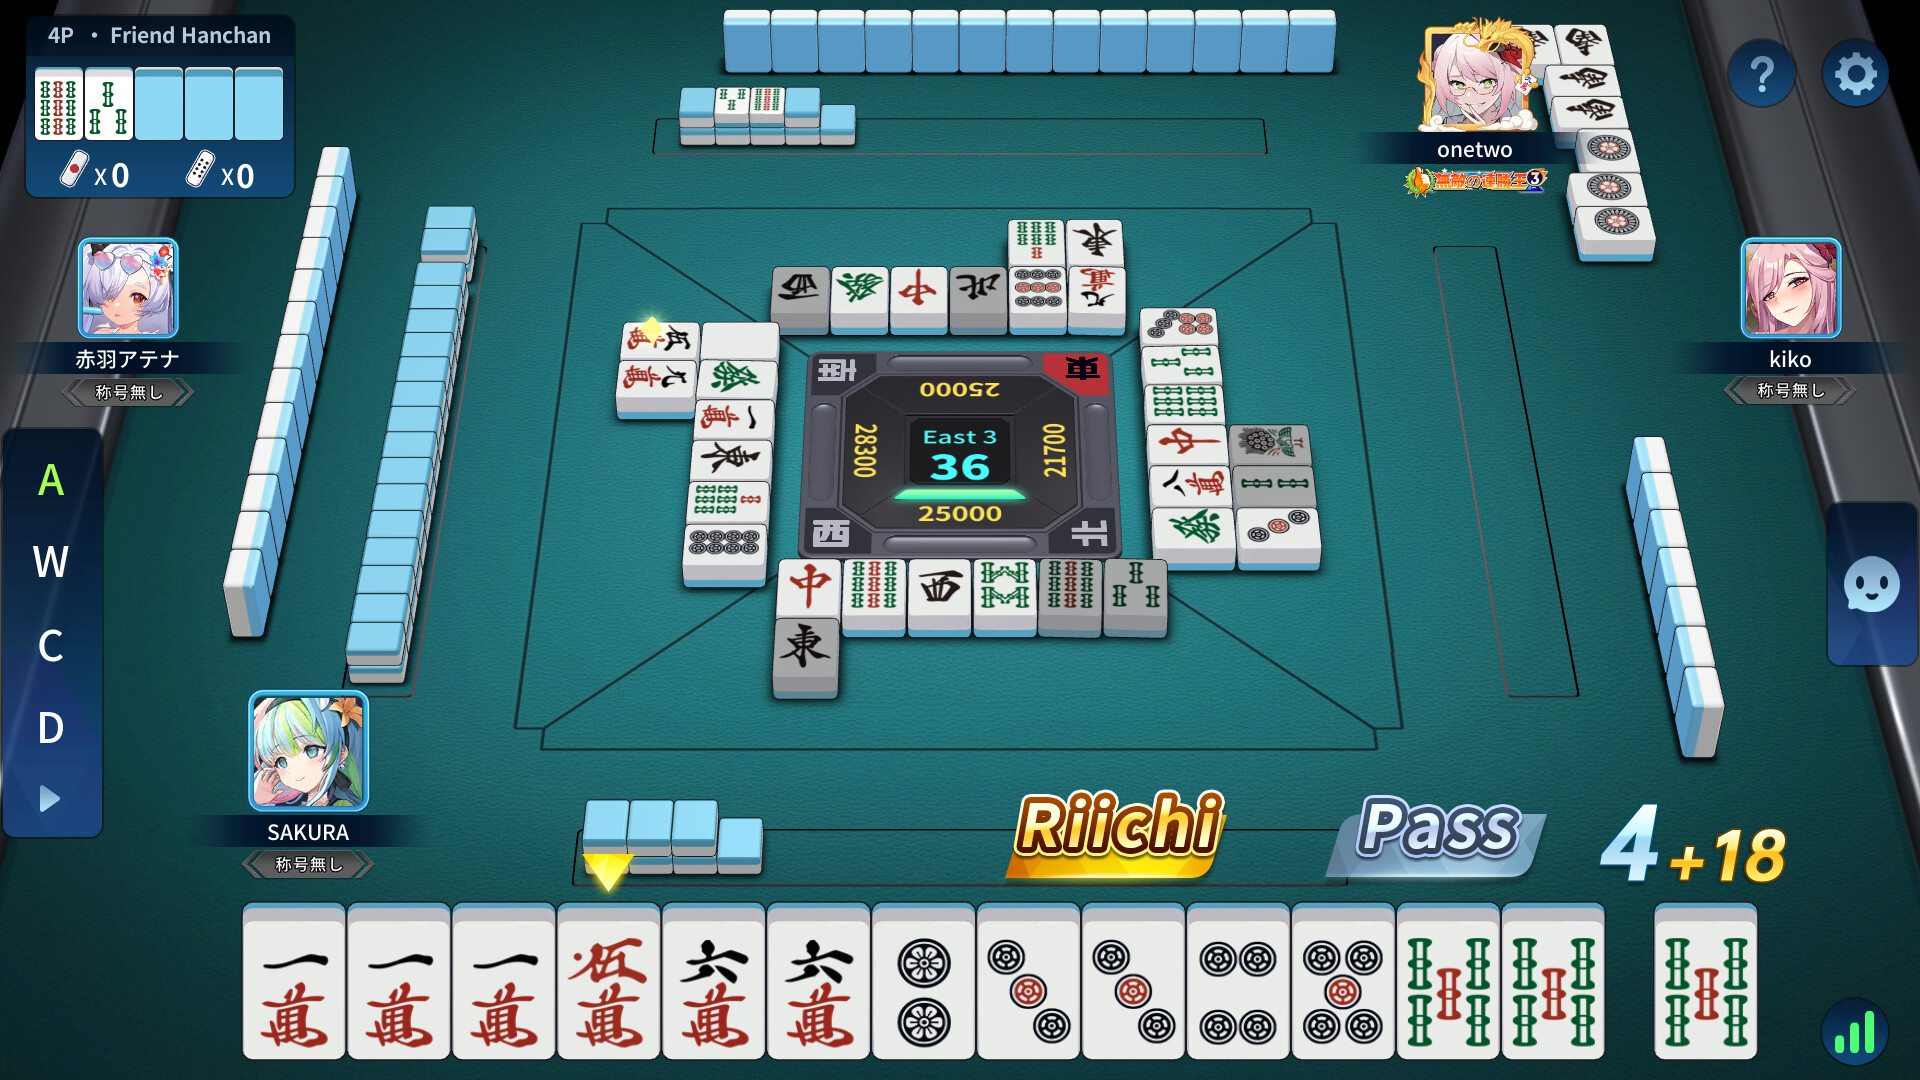 Riichi City - Japanese Mahjong Online on Steam